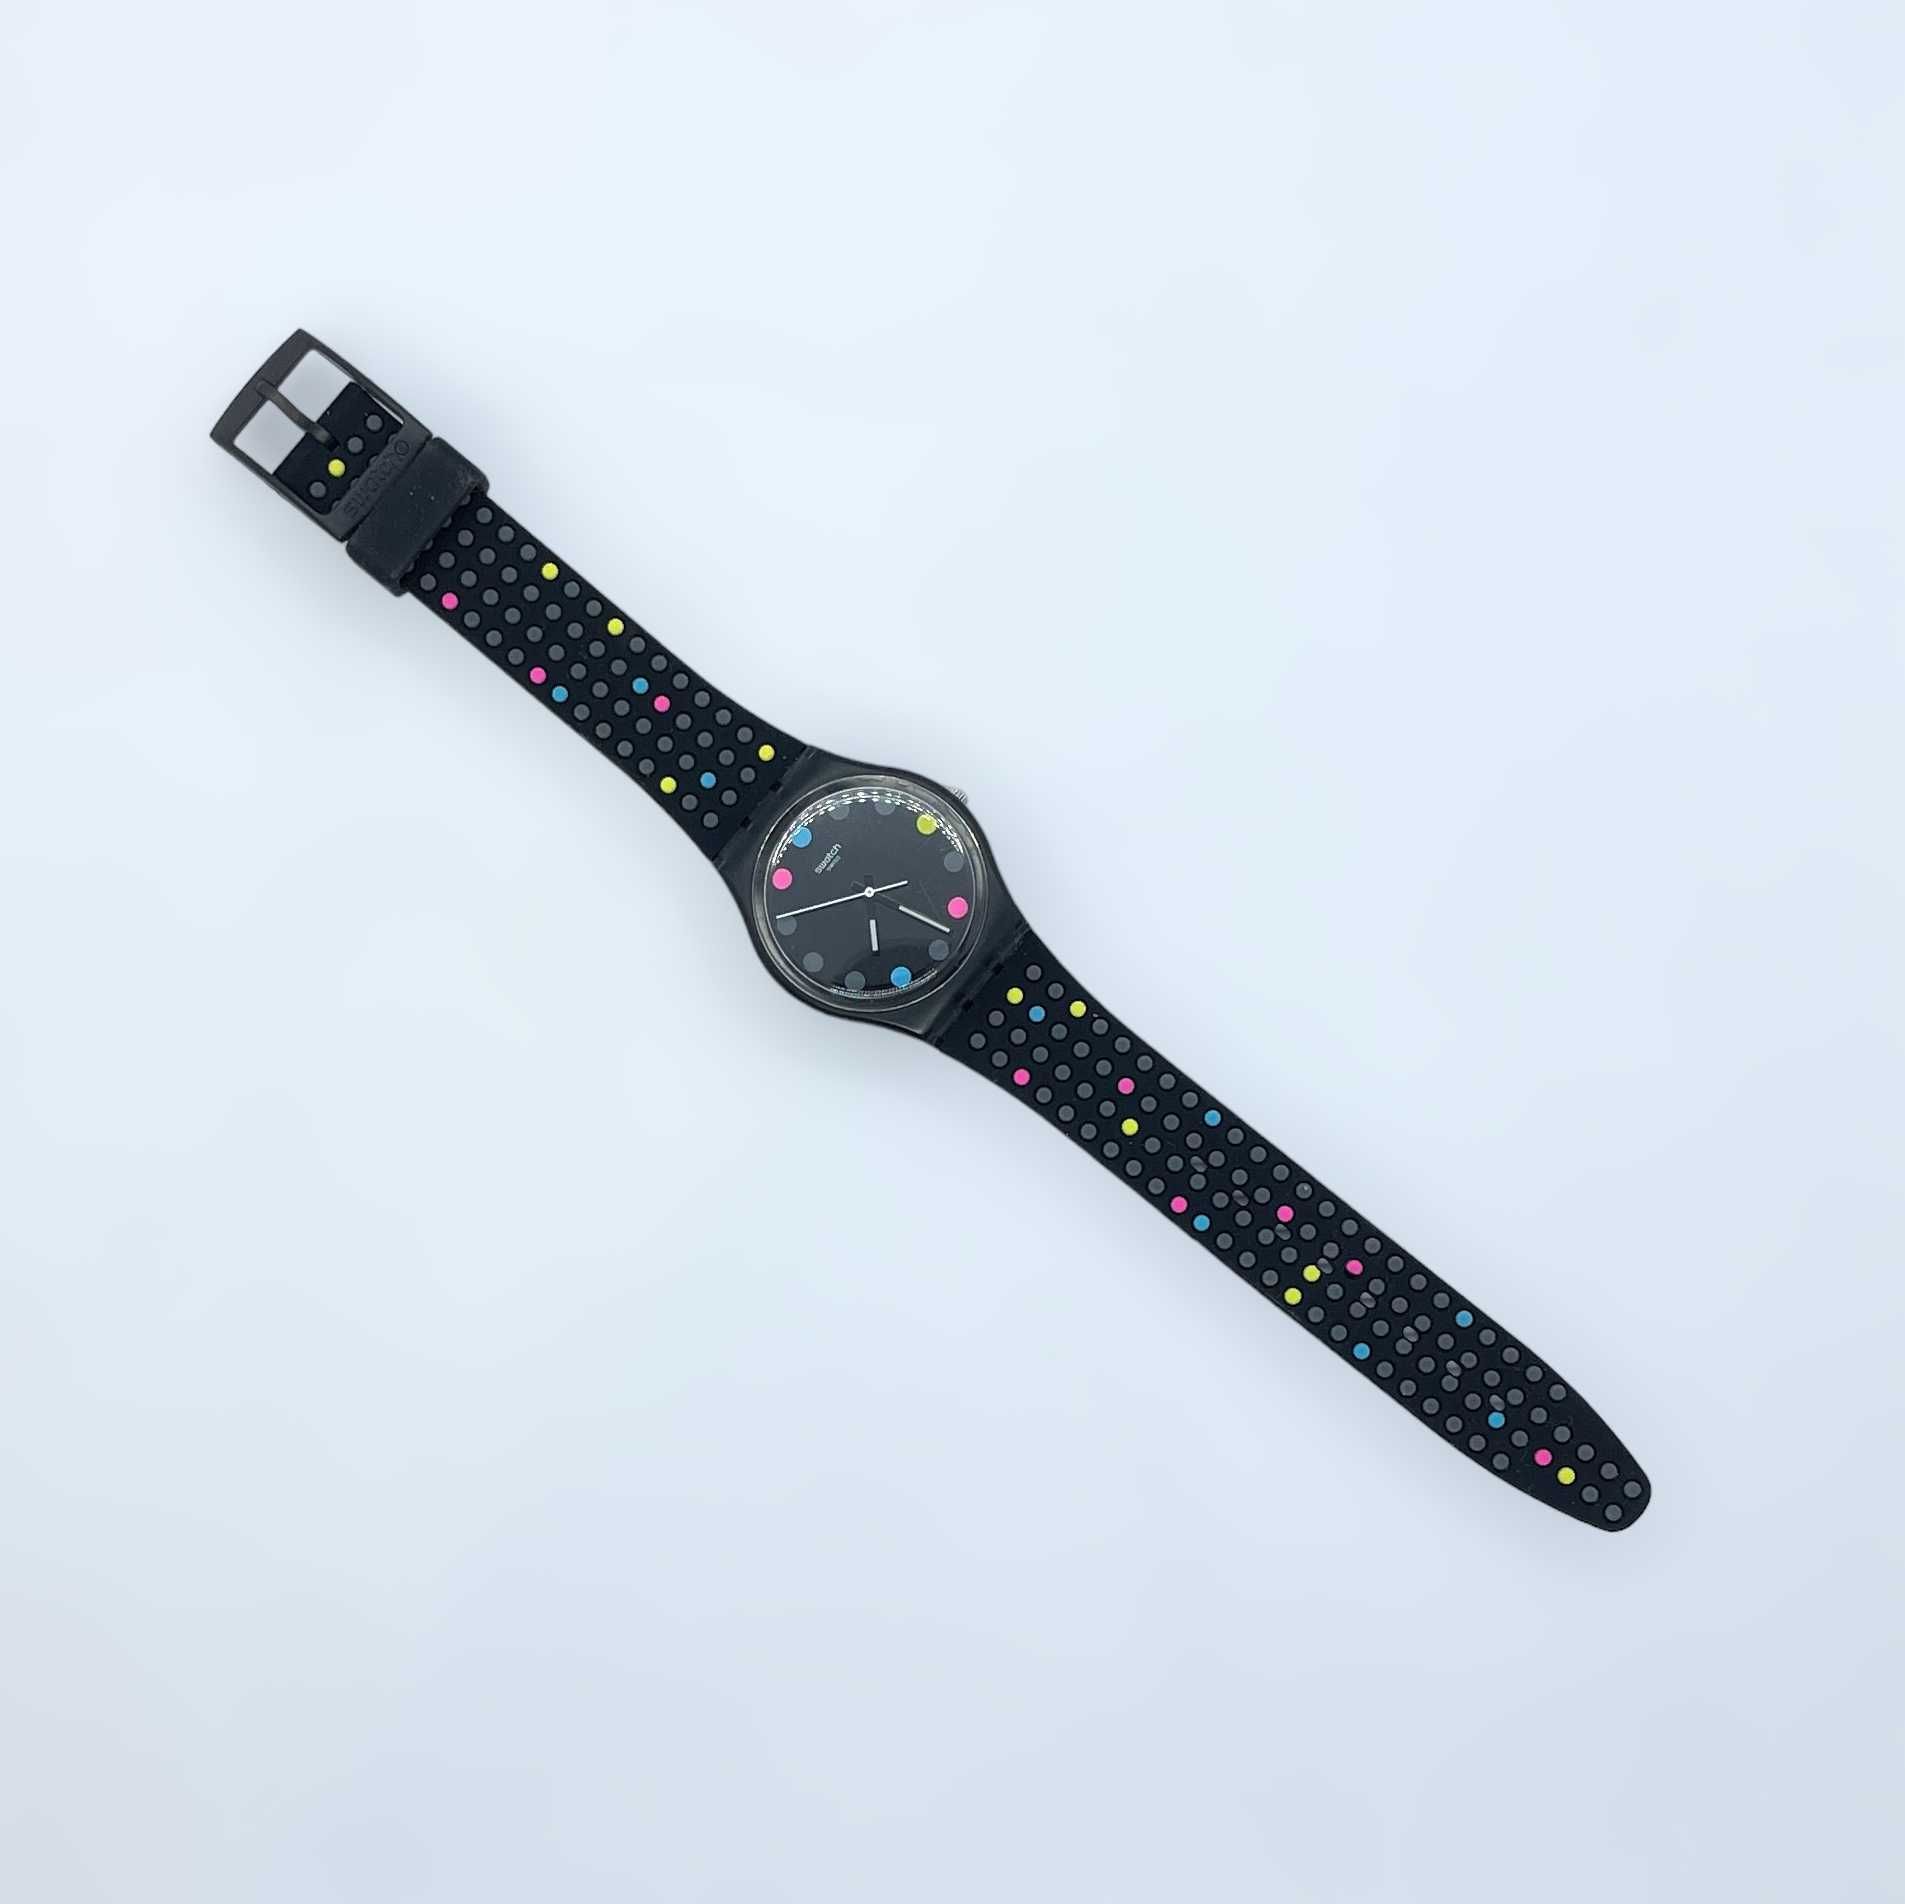 Swatch black colour dots швейцарски часовник